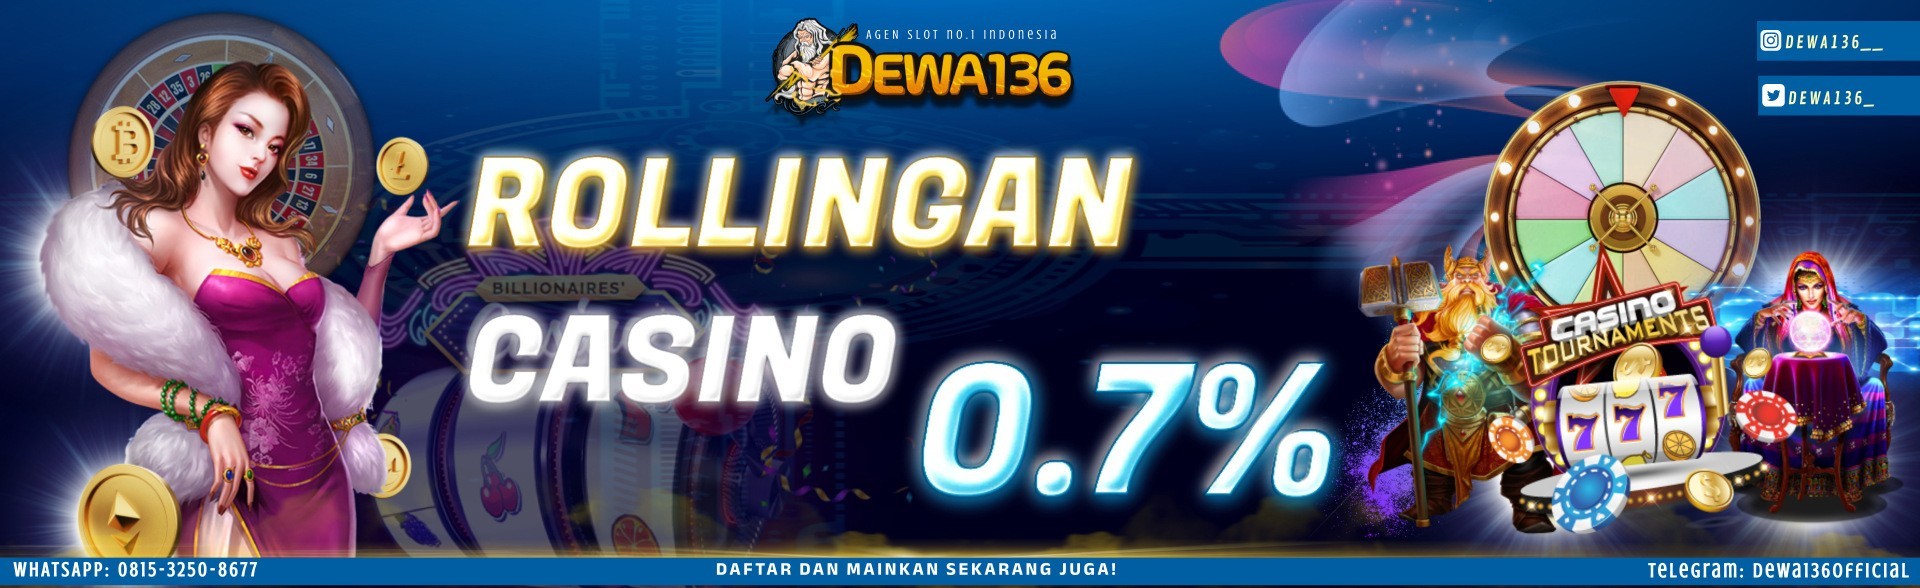 Bonus Rollingan Casino 0.7%